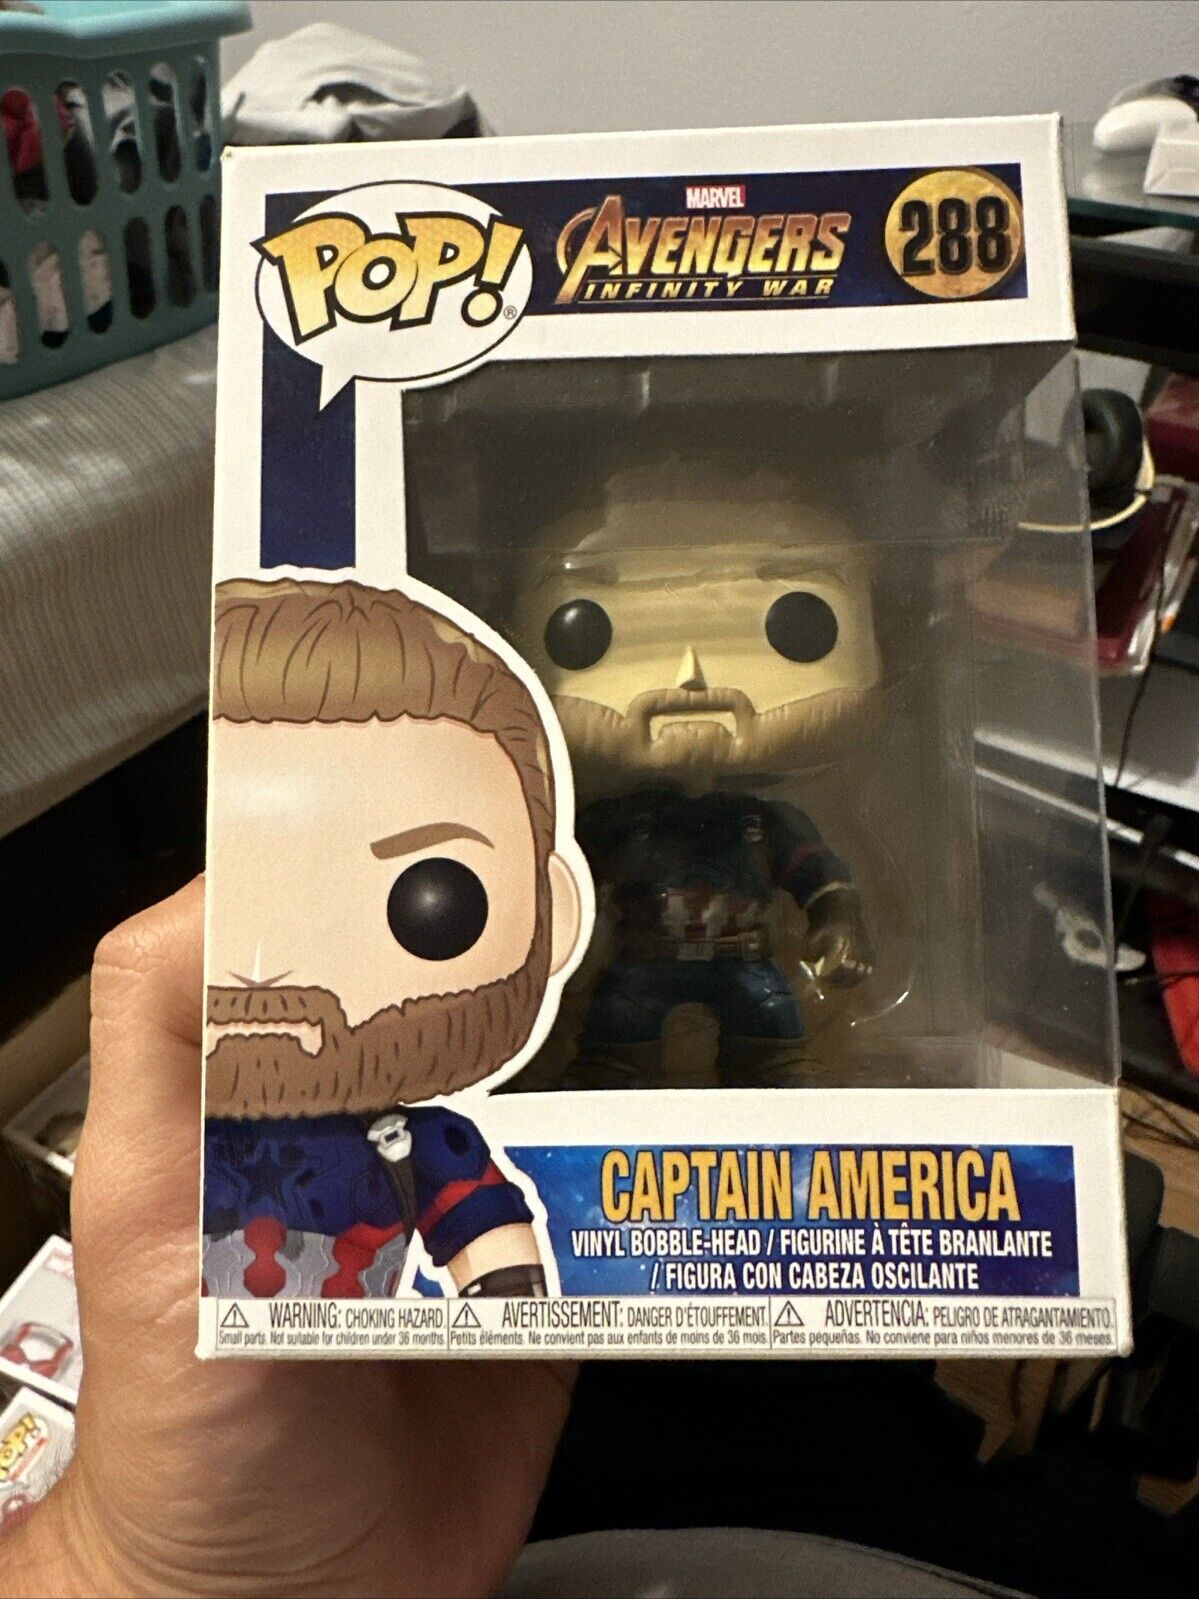 Captain America Funko Pop